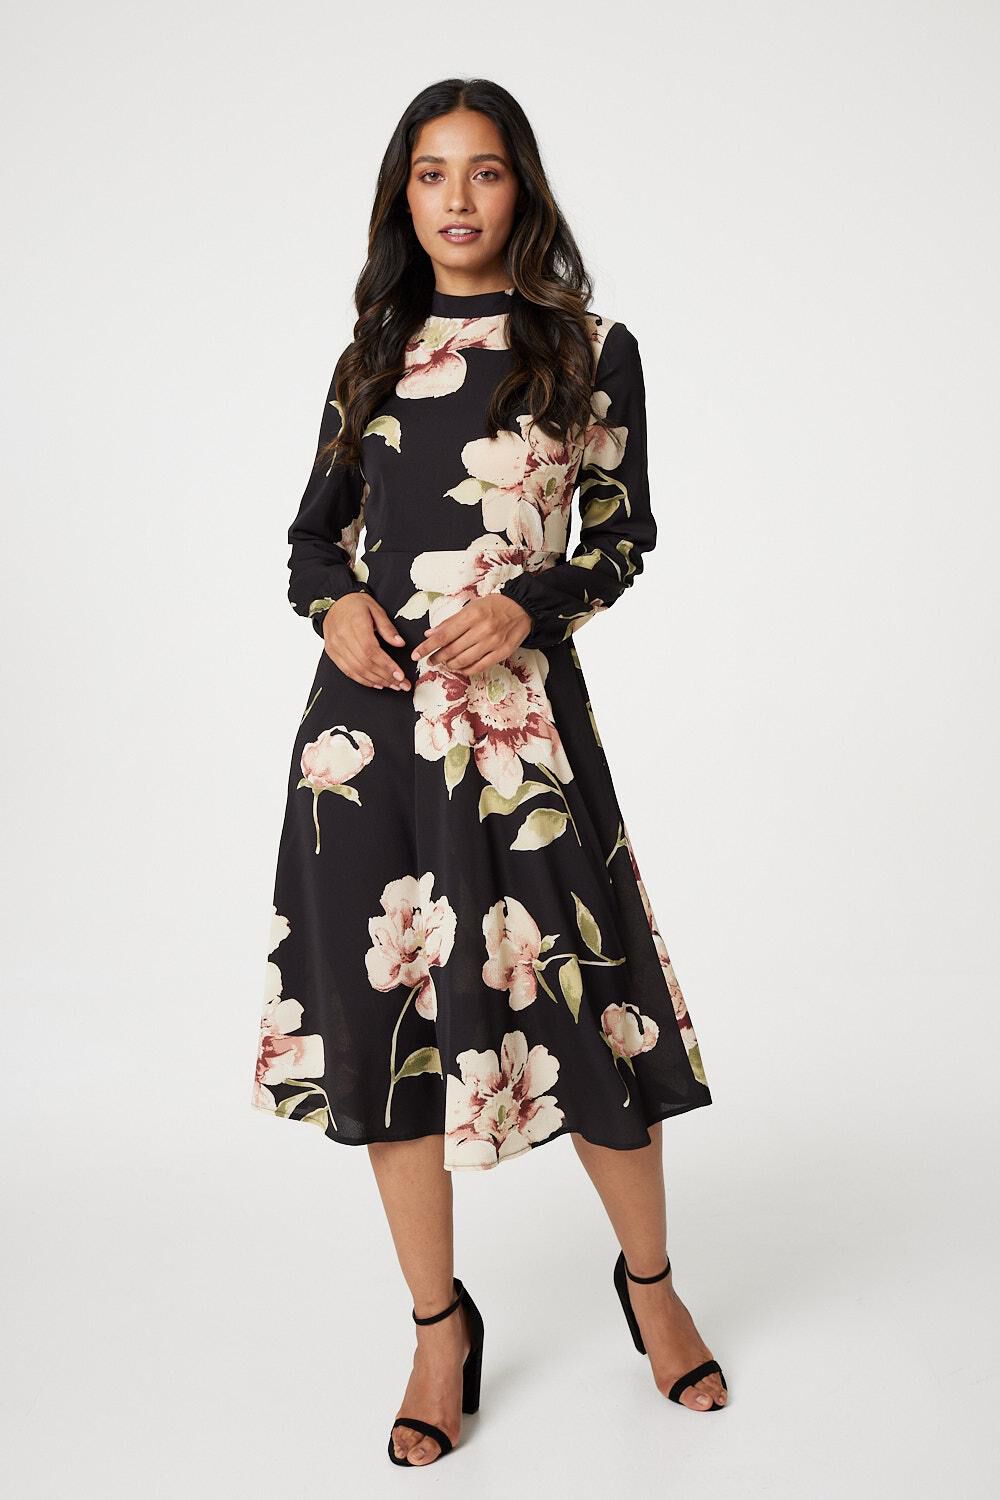 Izabel London Women’s Black and Beige Floral Print Long Sleeve Midi Tea Dress, Size: 16